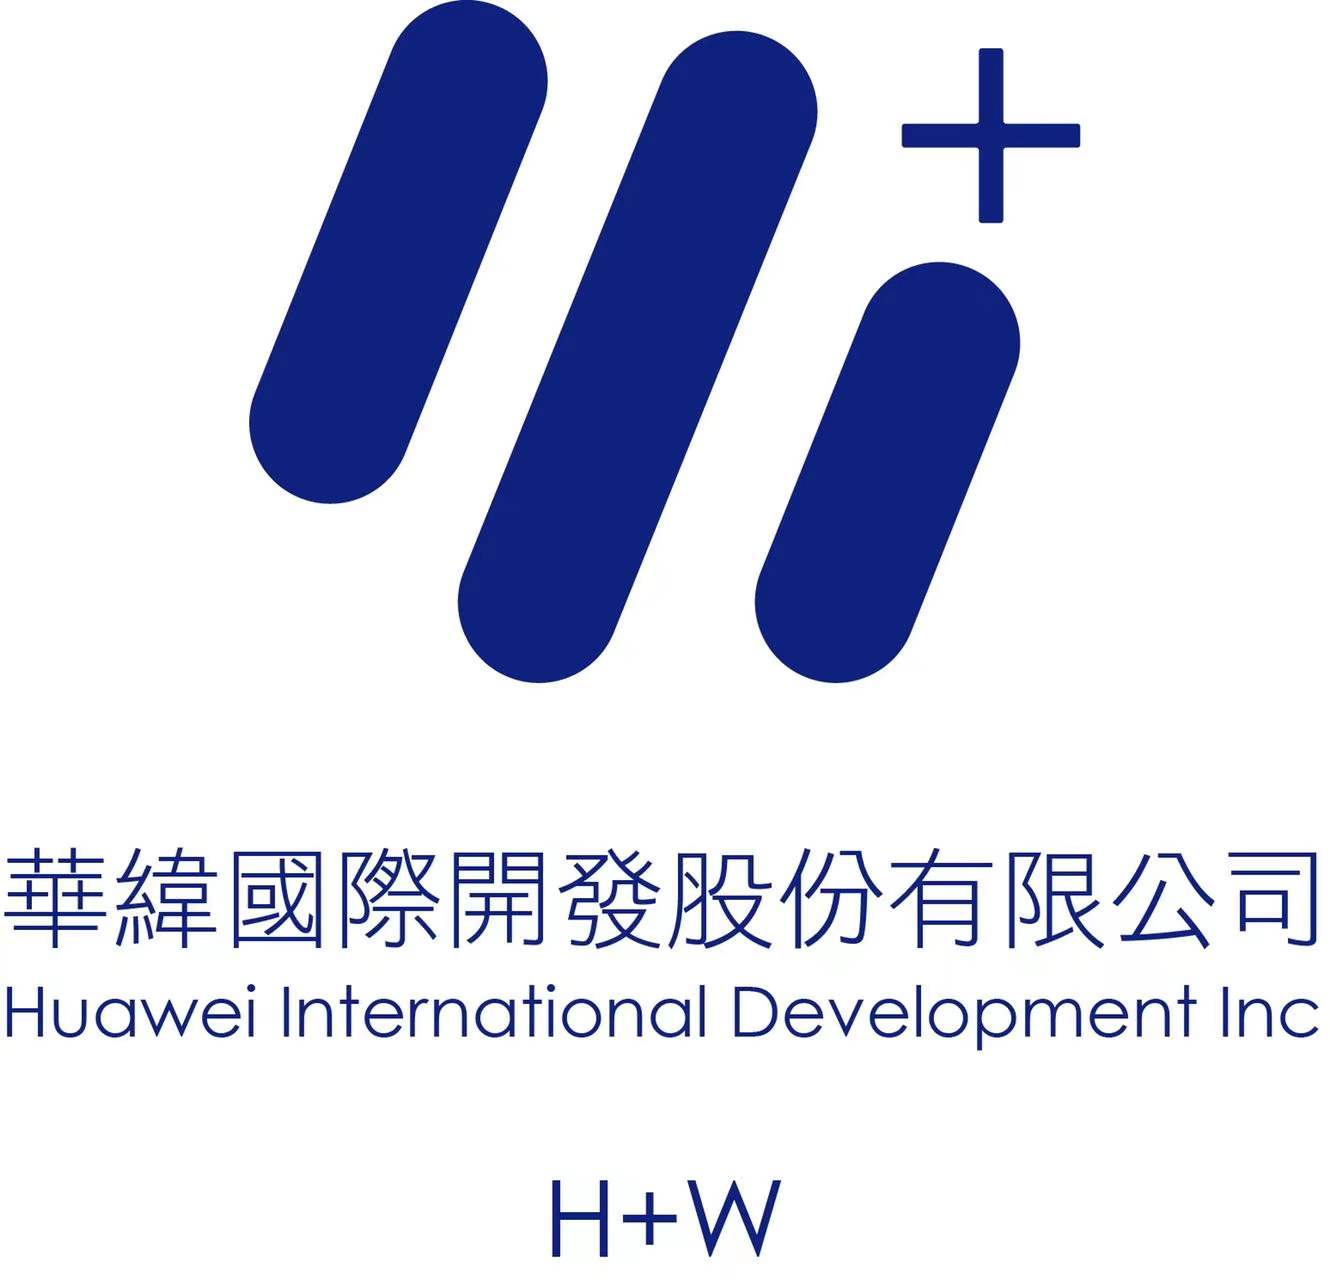 Huawei International Development